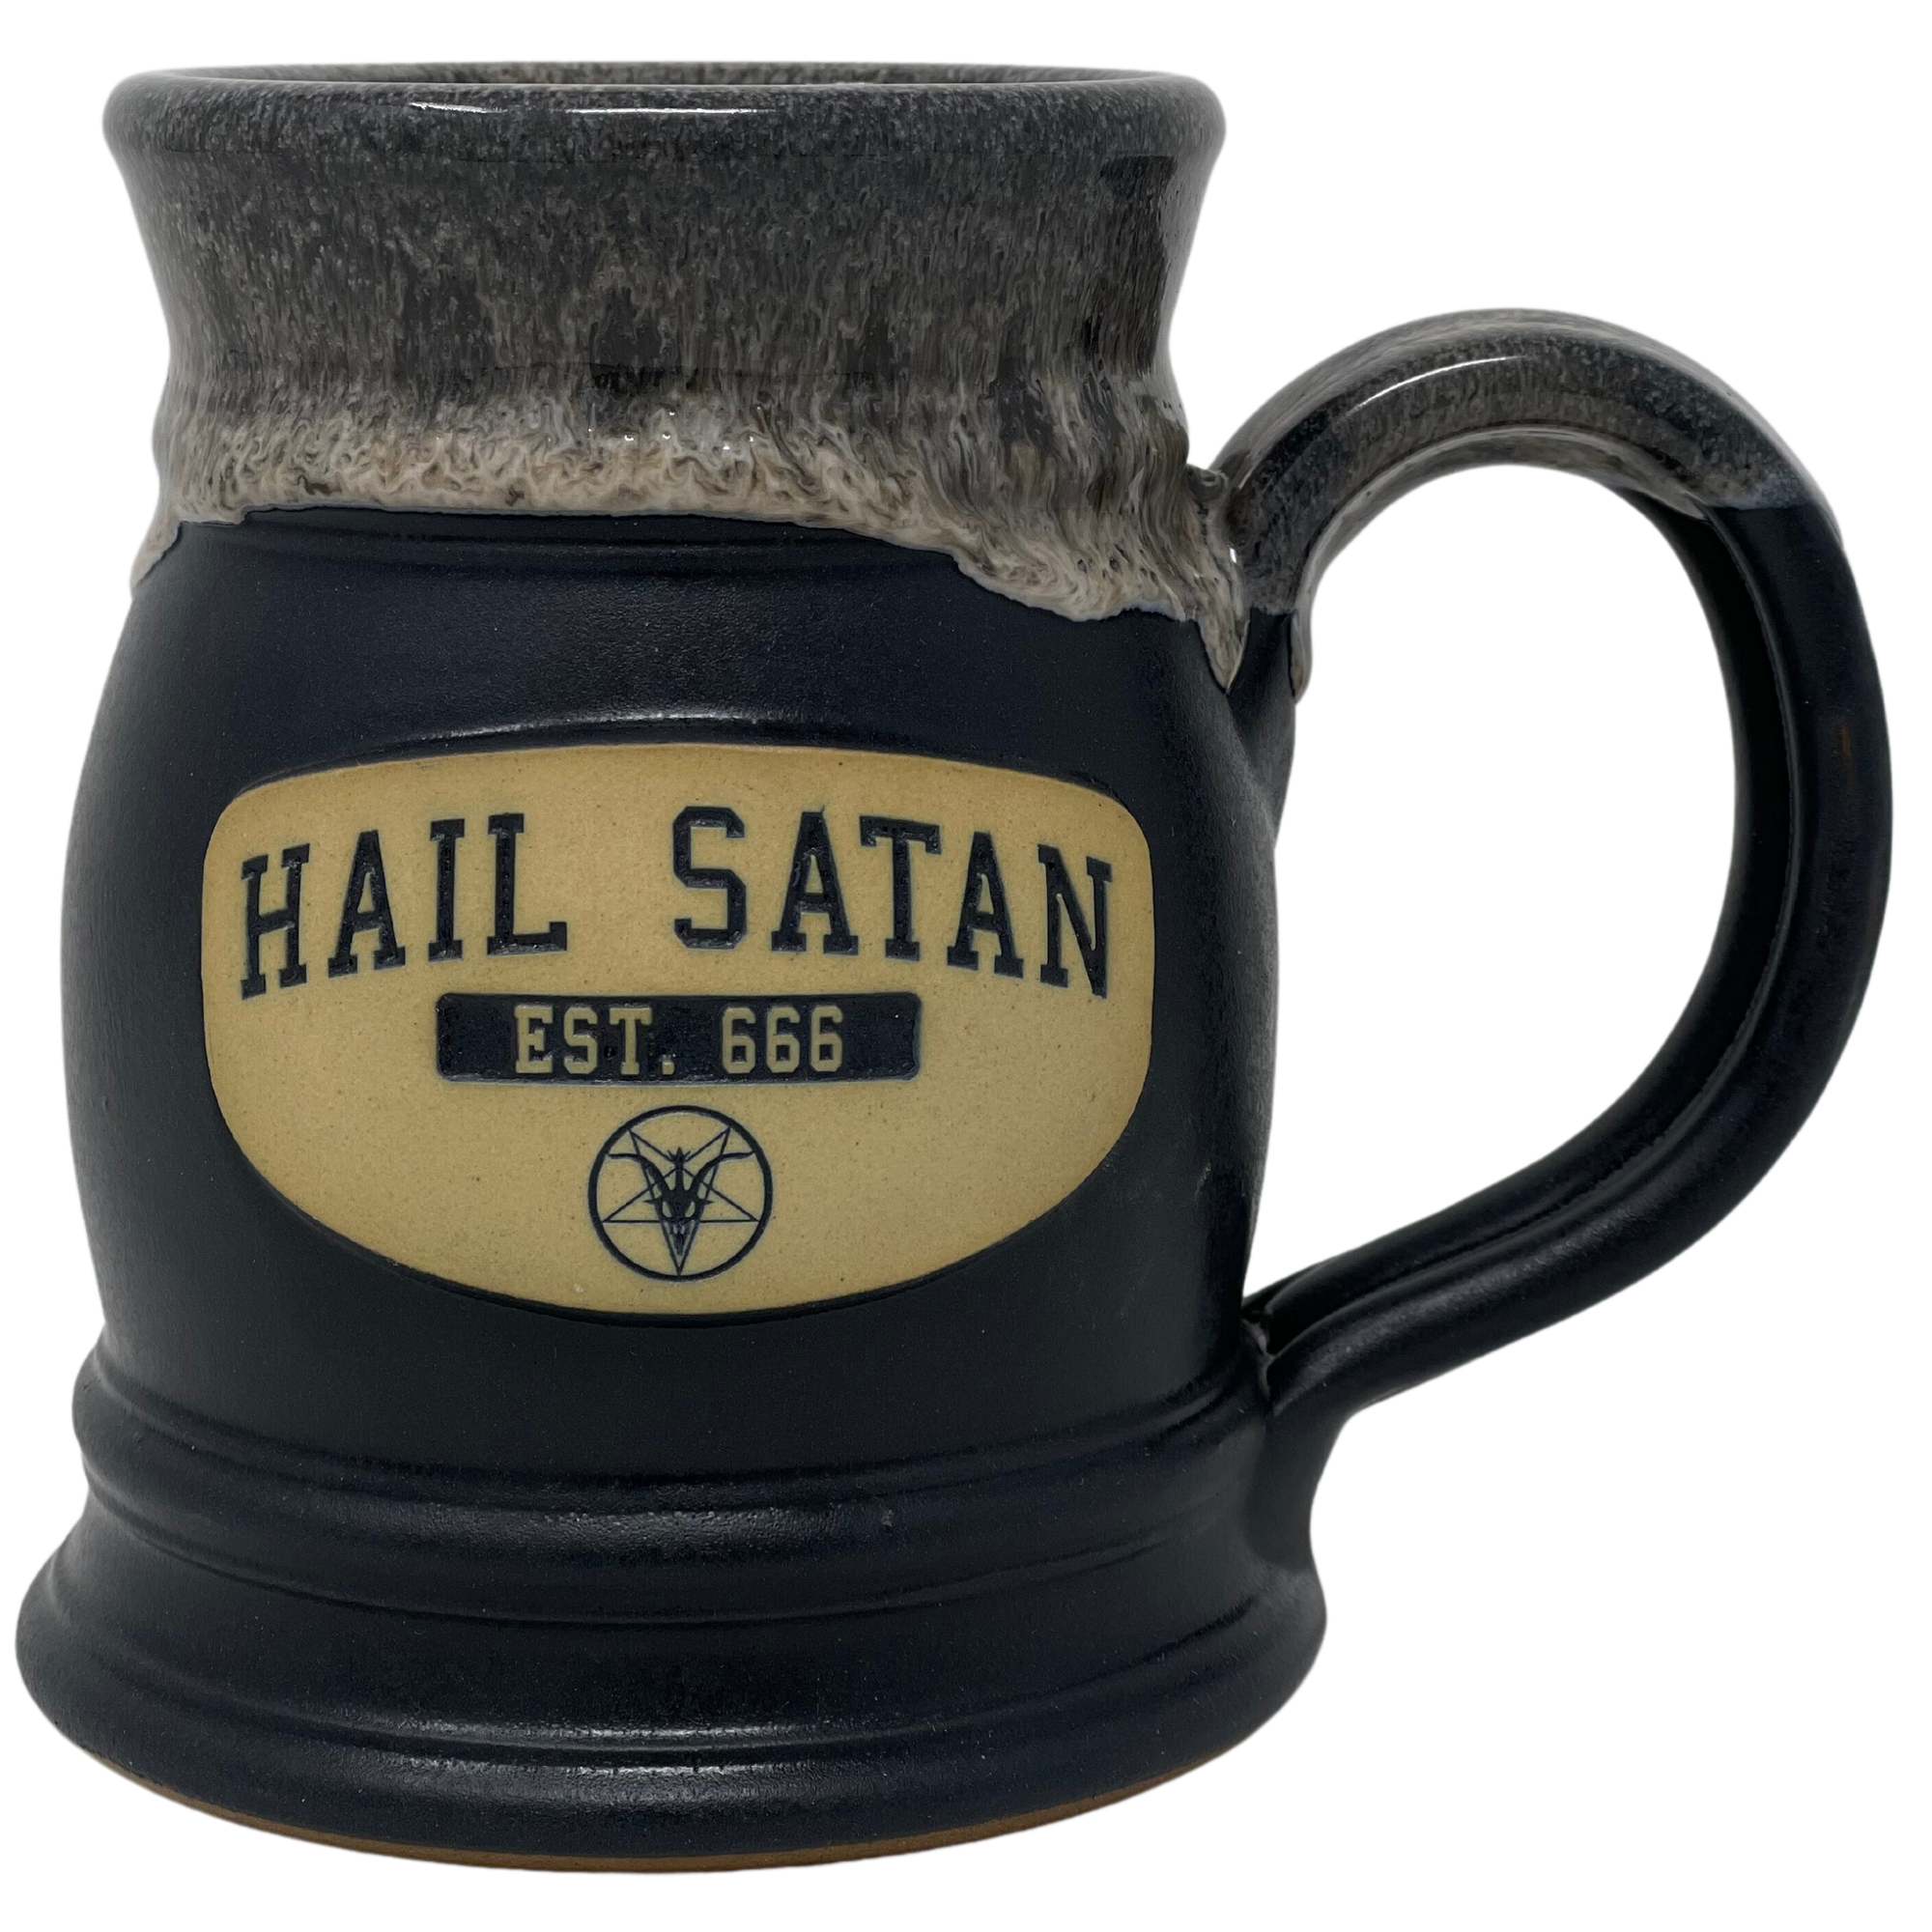 Hail Satan Mug Collection